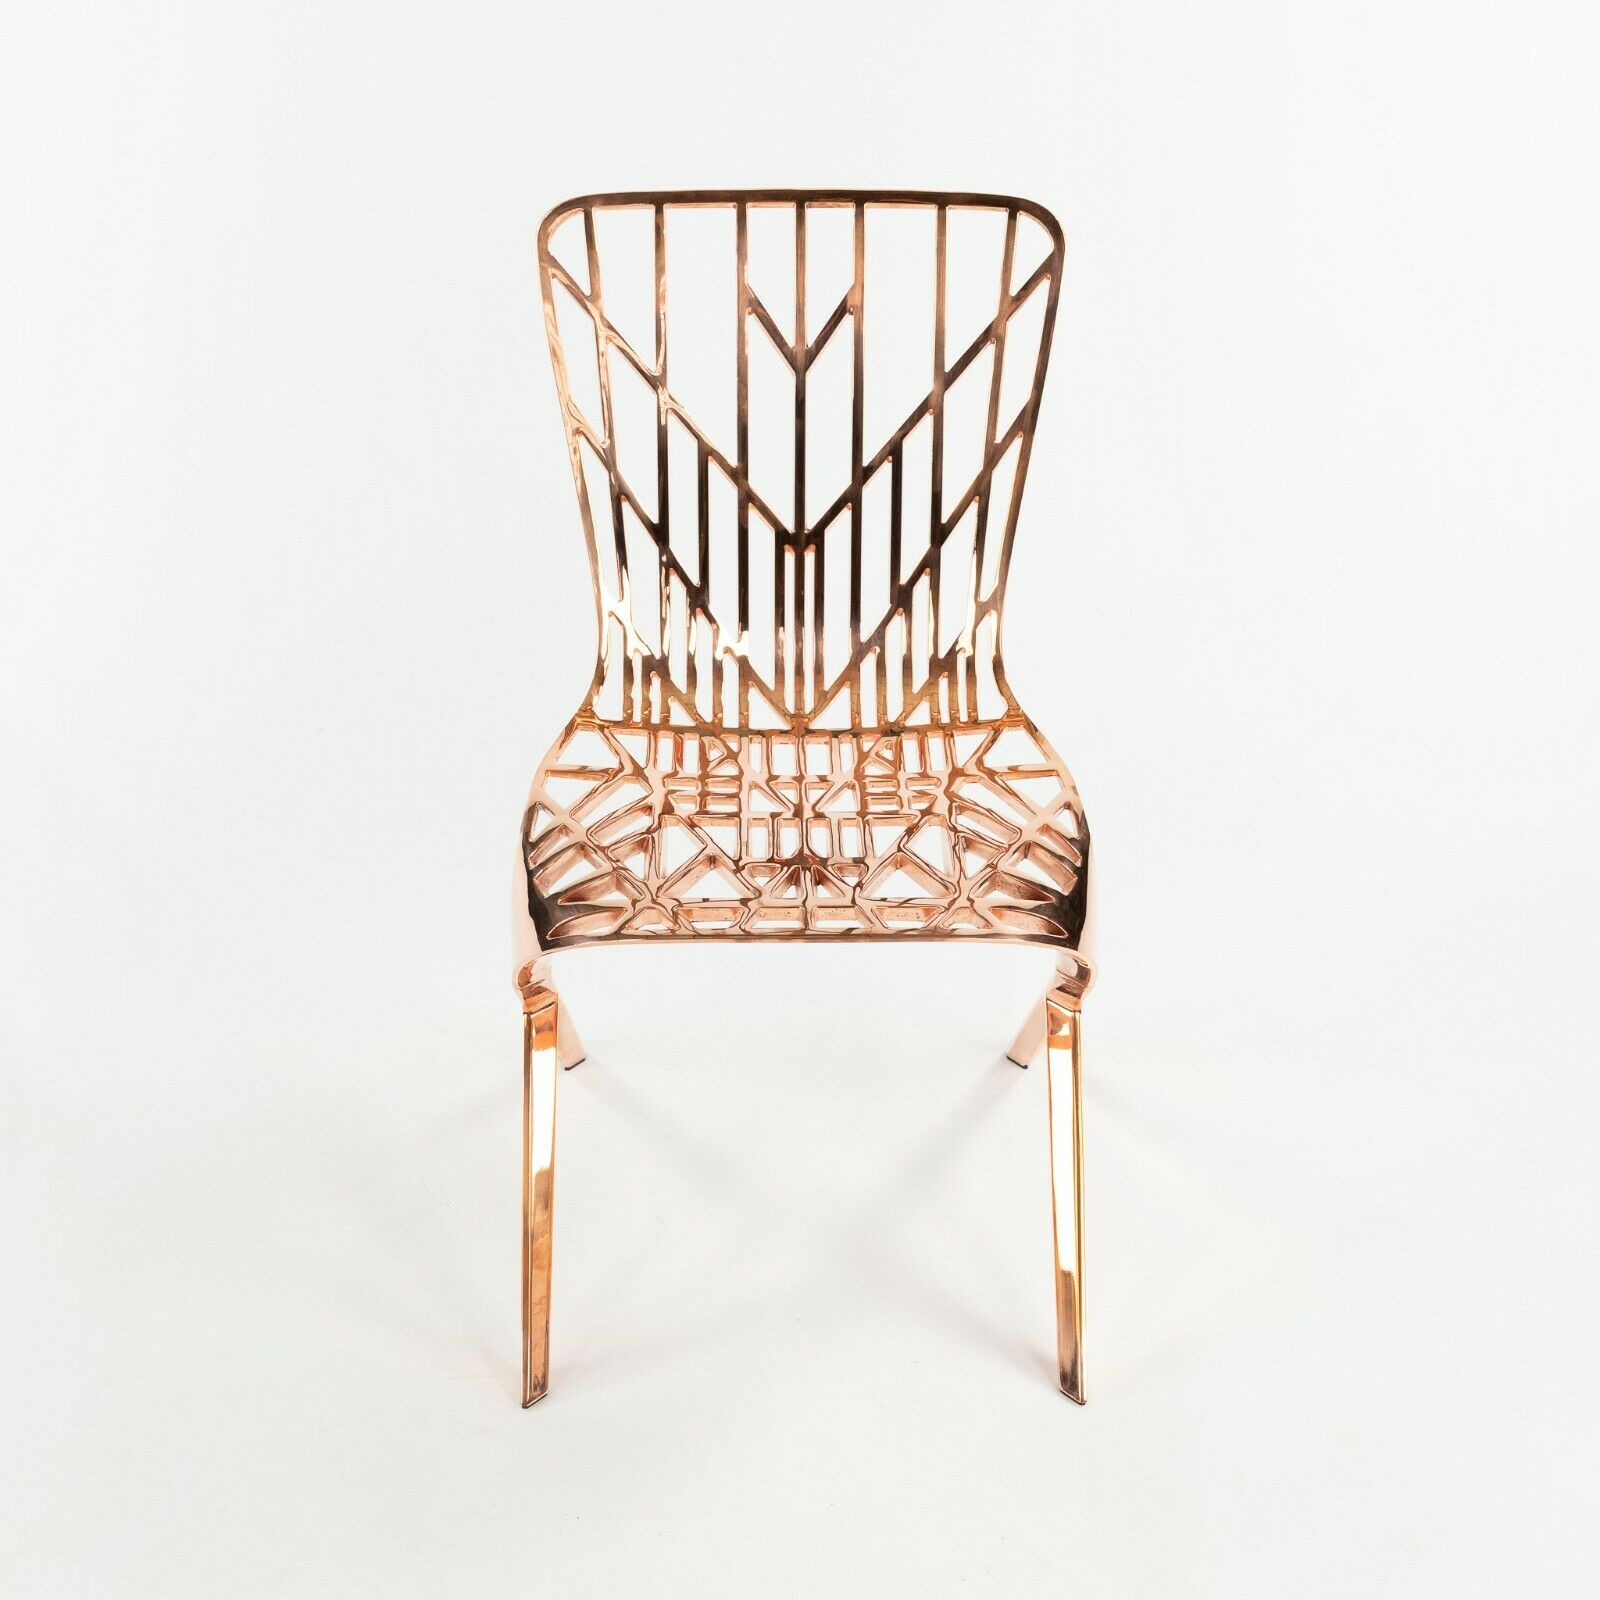 SOLD David Adjaye for Knoll Studio Washington Skeleton Dining Chair w/ Copper Finish